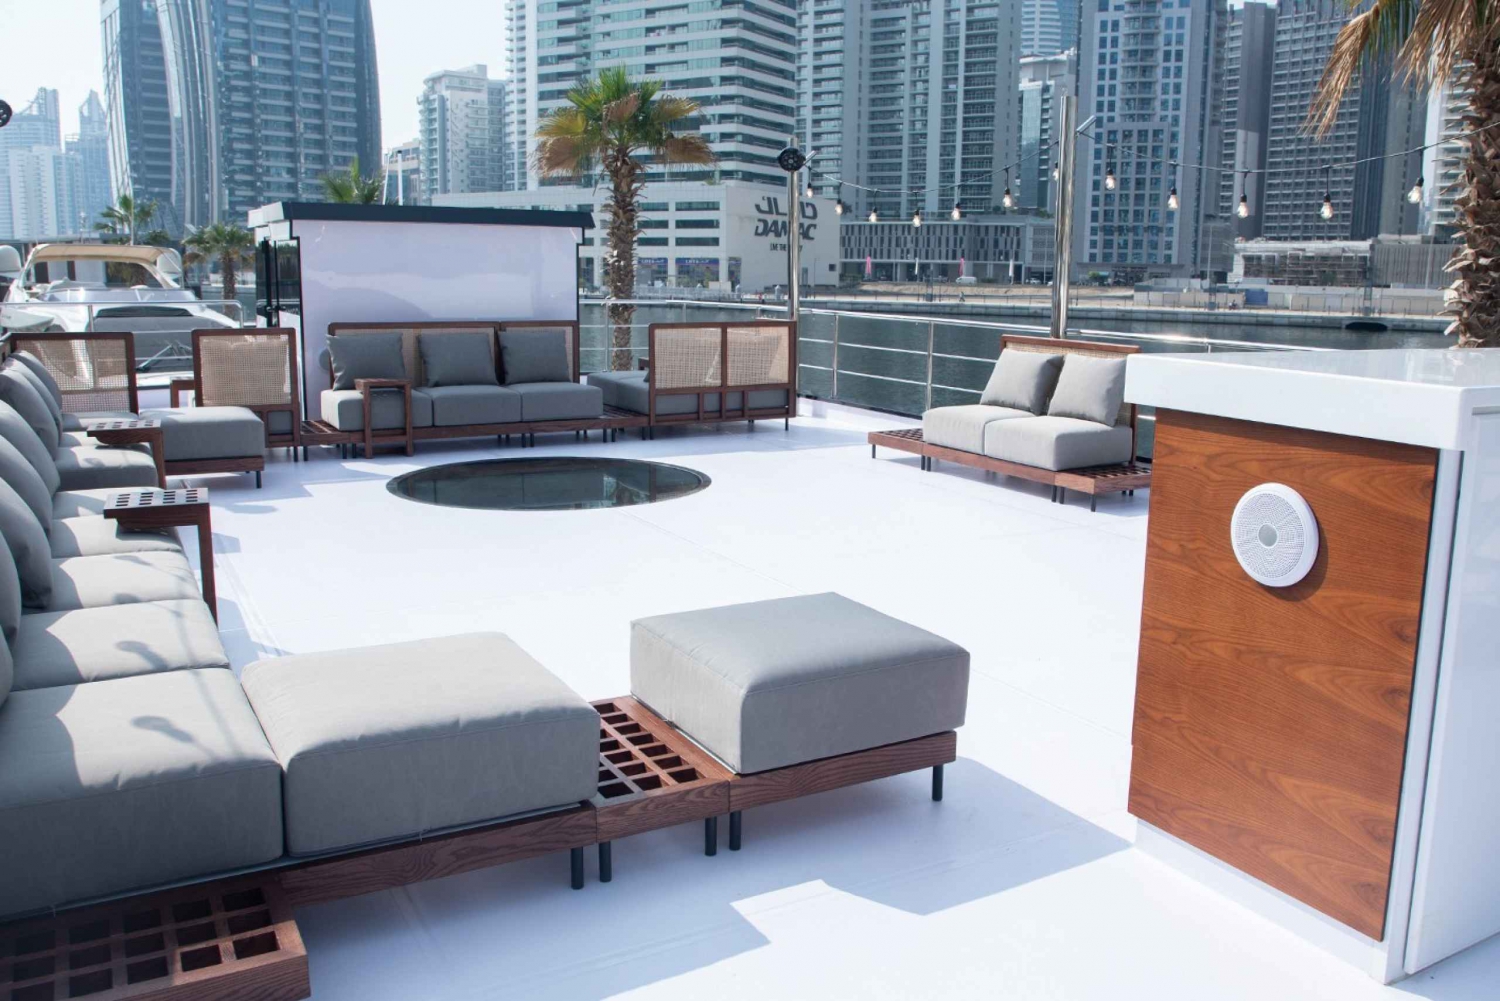 Dubai: Luxury Yacht Tour with Snacks and Drinks